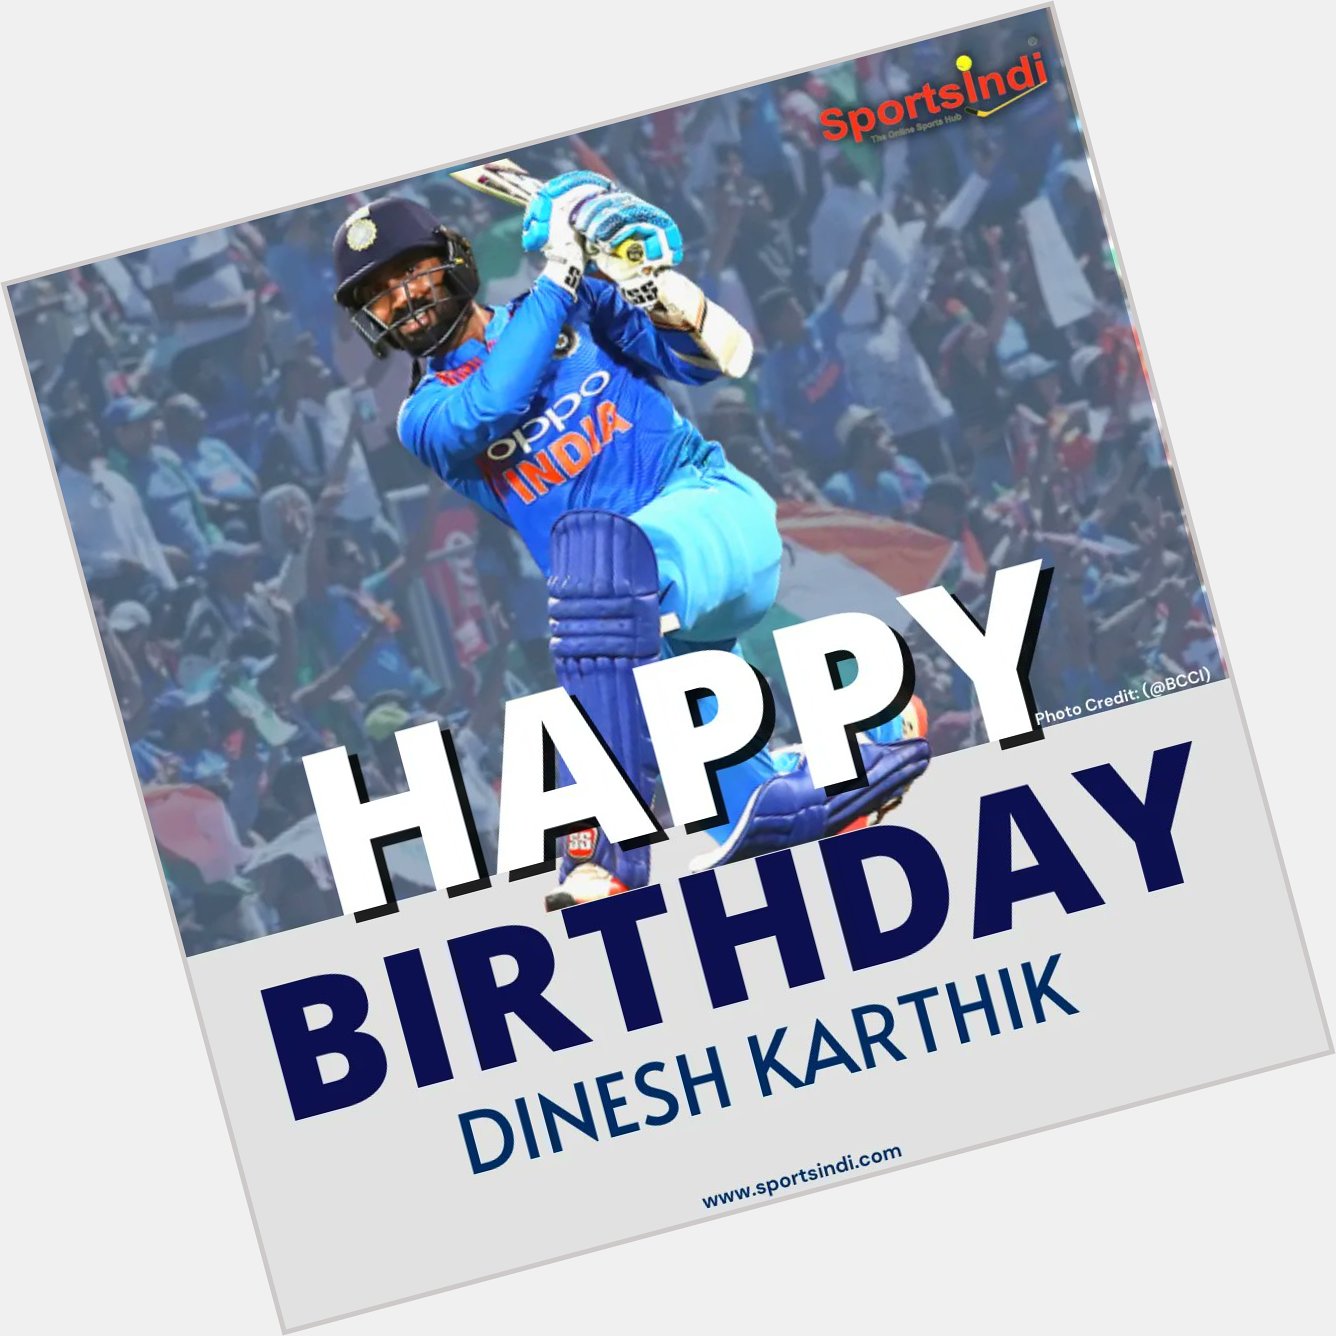 Wishing Dinesh Karthik a Very Happy Birthday. 